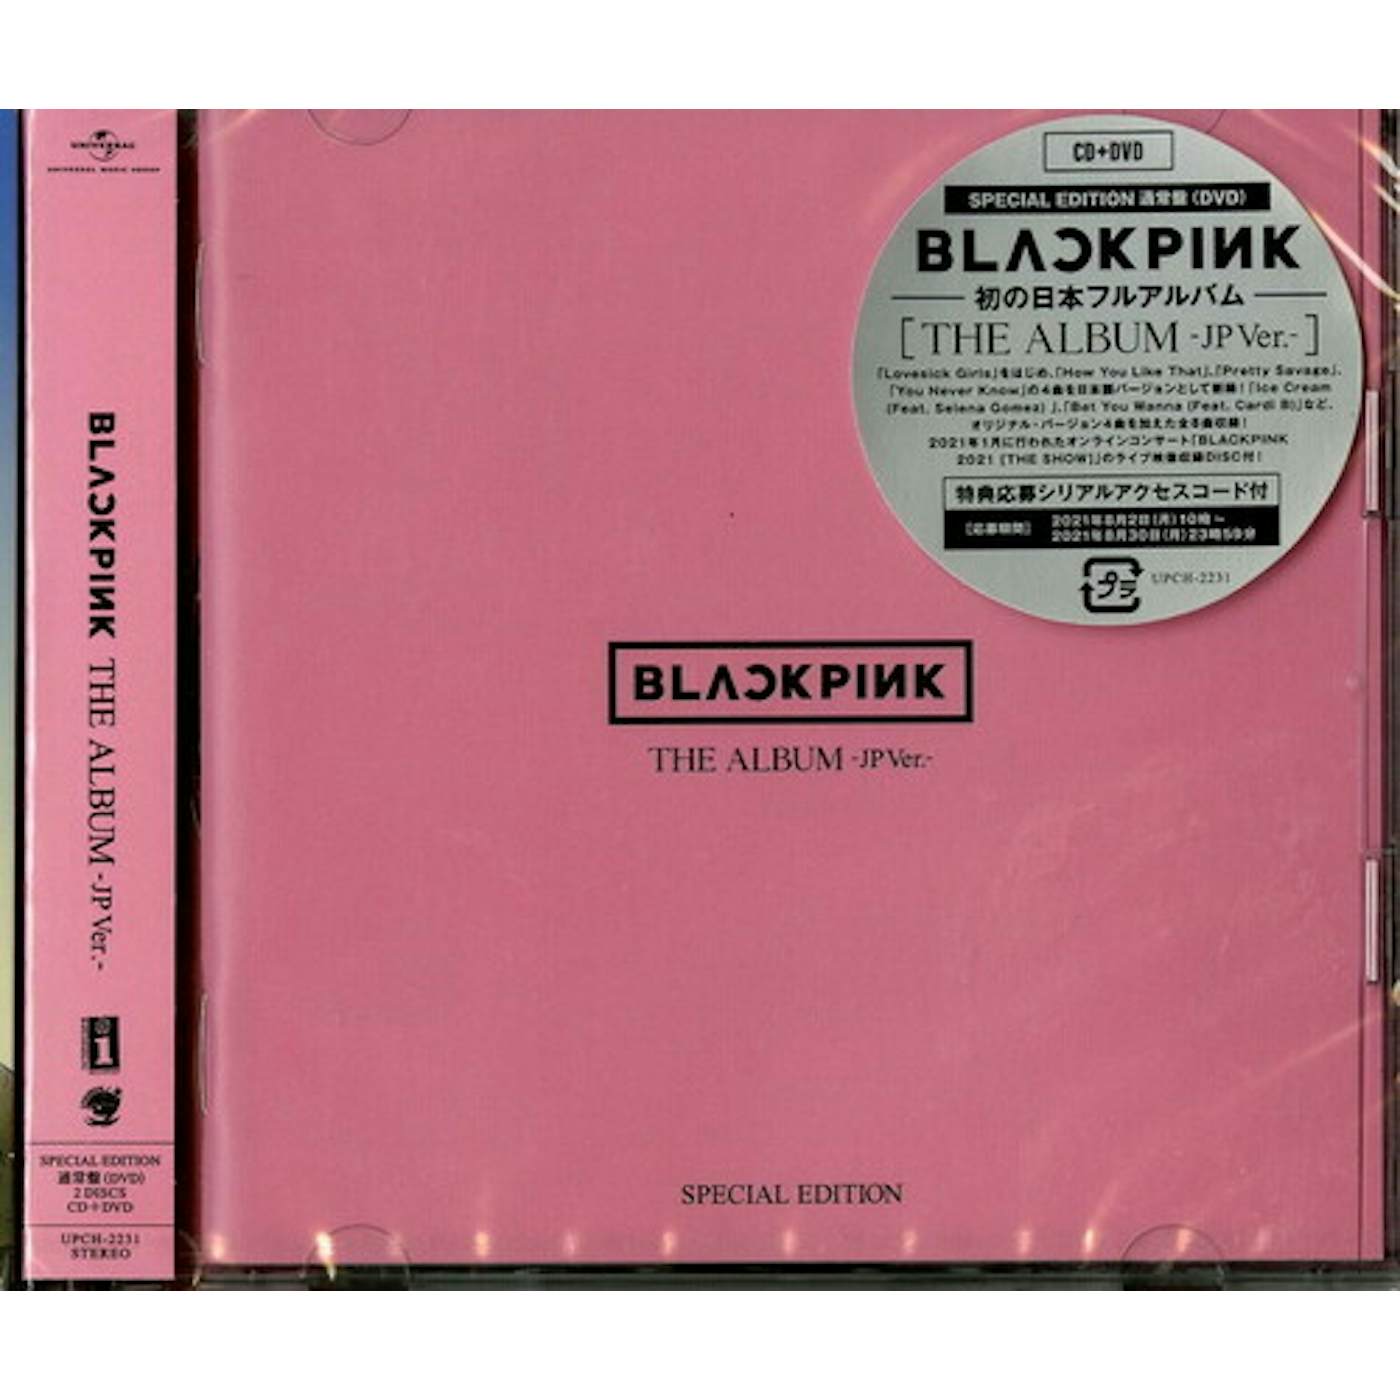 BLACKPINK ALBUM (JAPANESE VERSION) CD